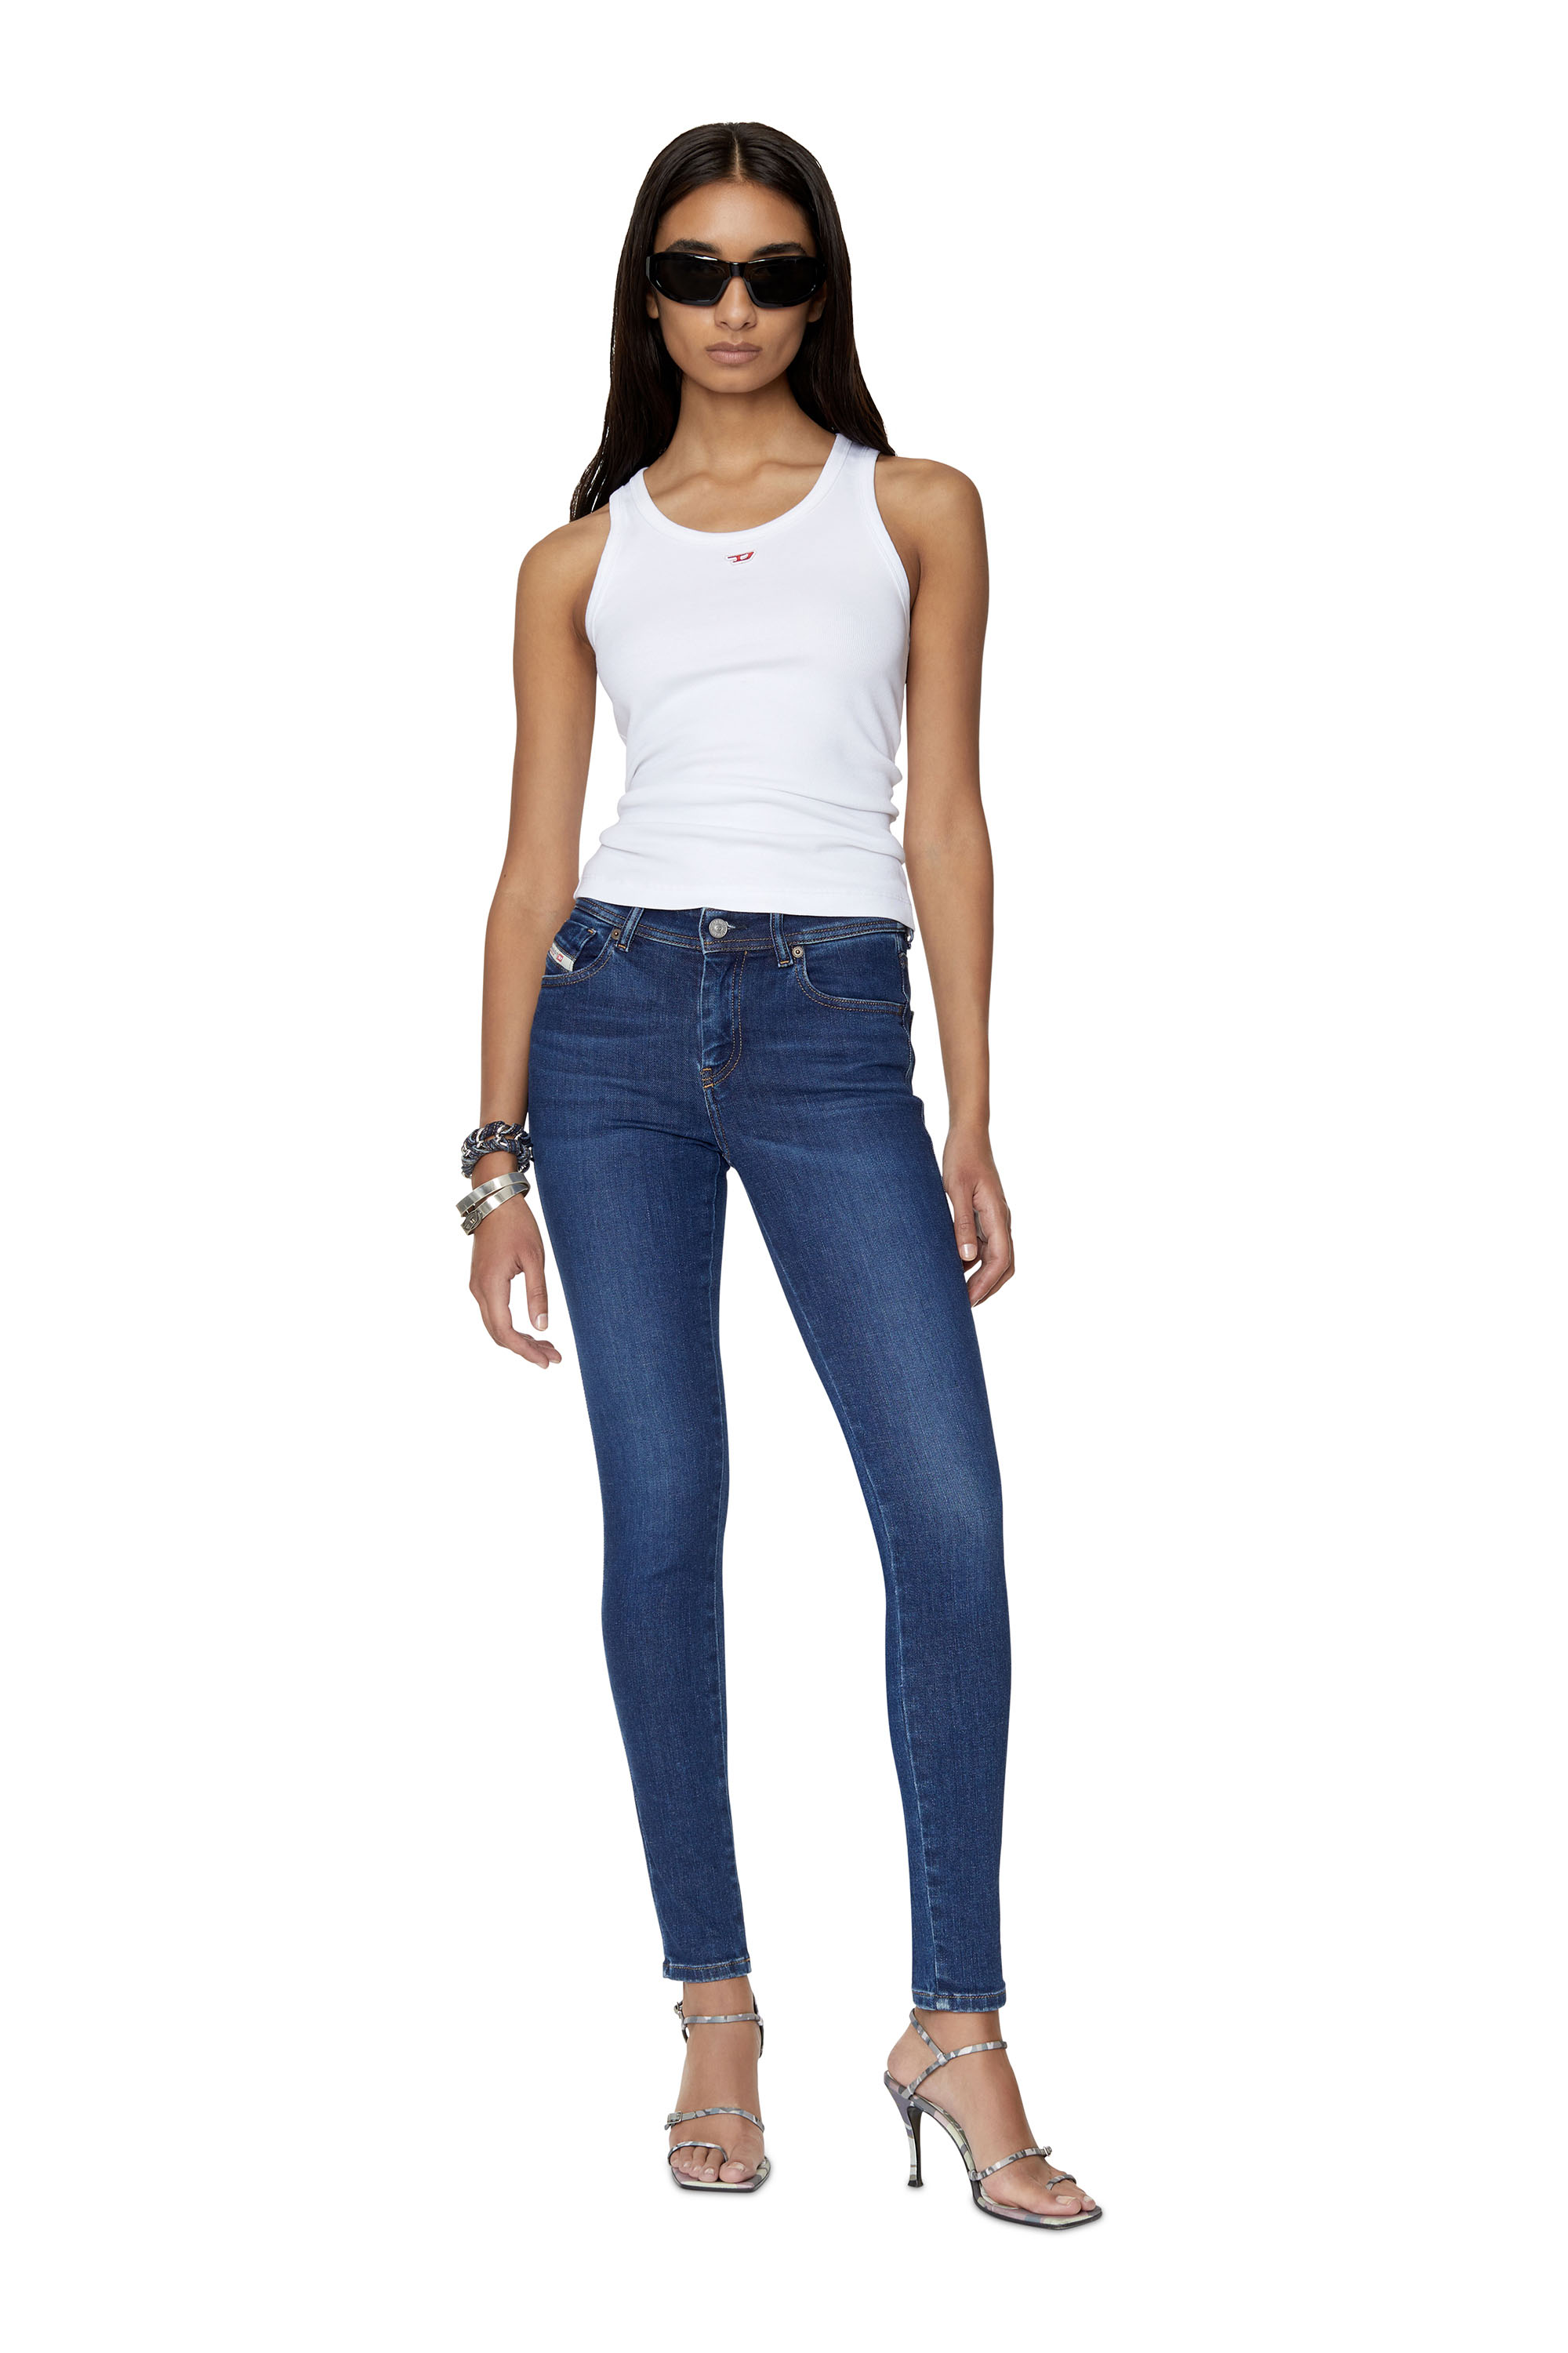 Super skinny Jeans 2017 Slandy 09C19